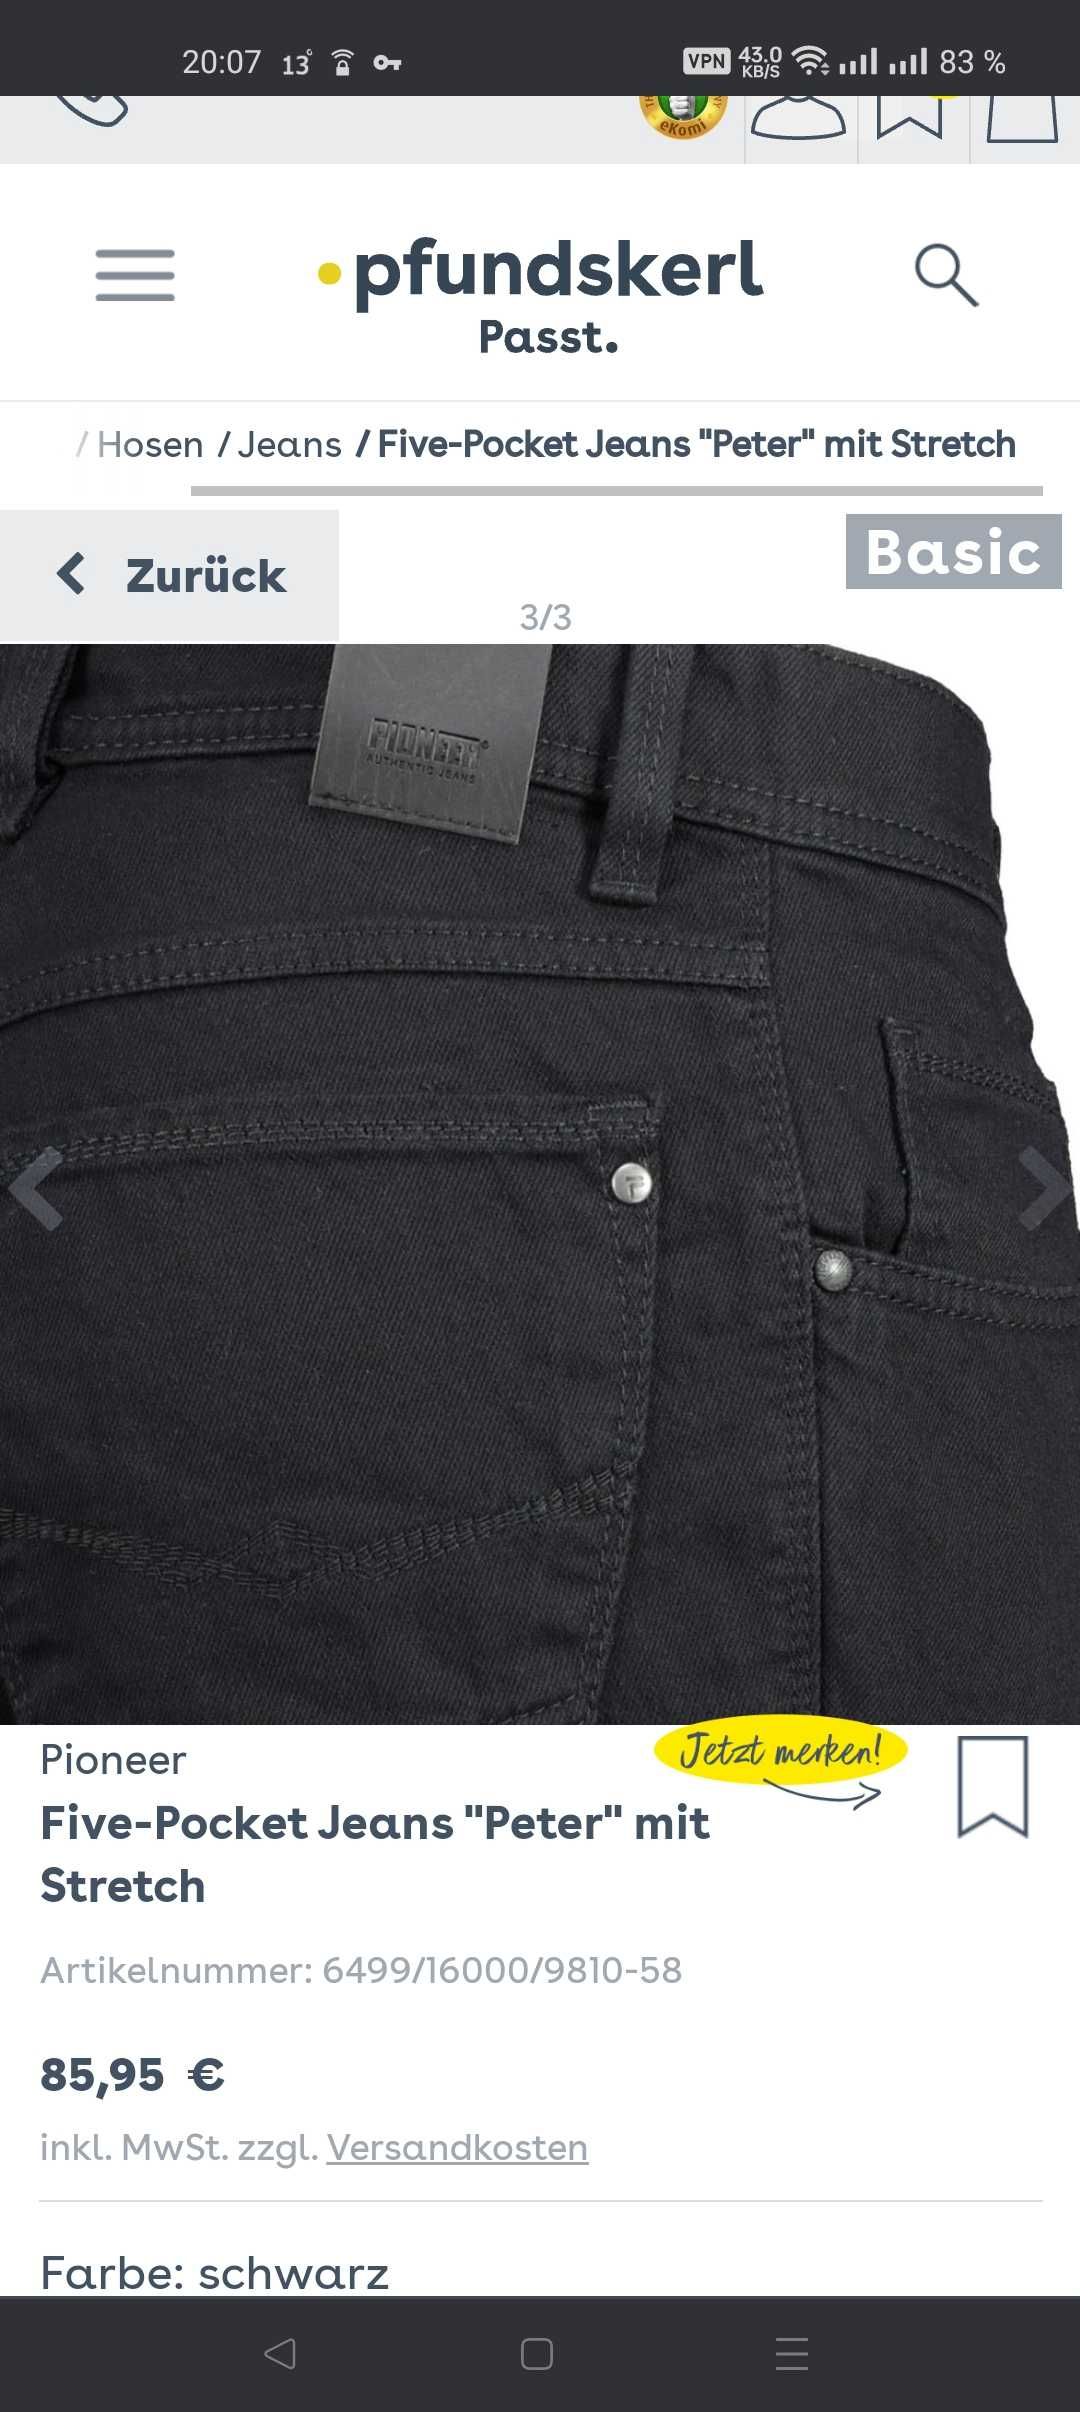 Джинсы Pioneer jeans Germany w38 stretch black.